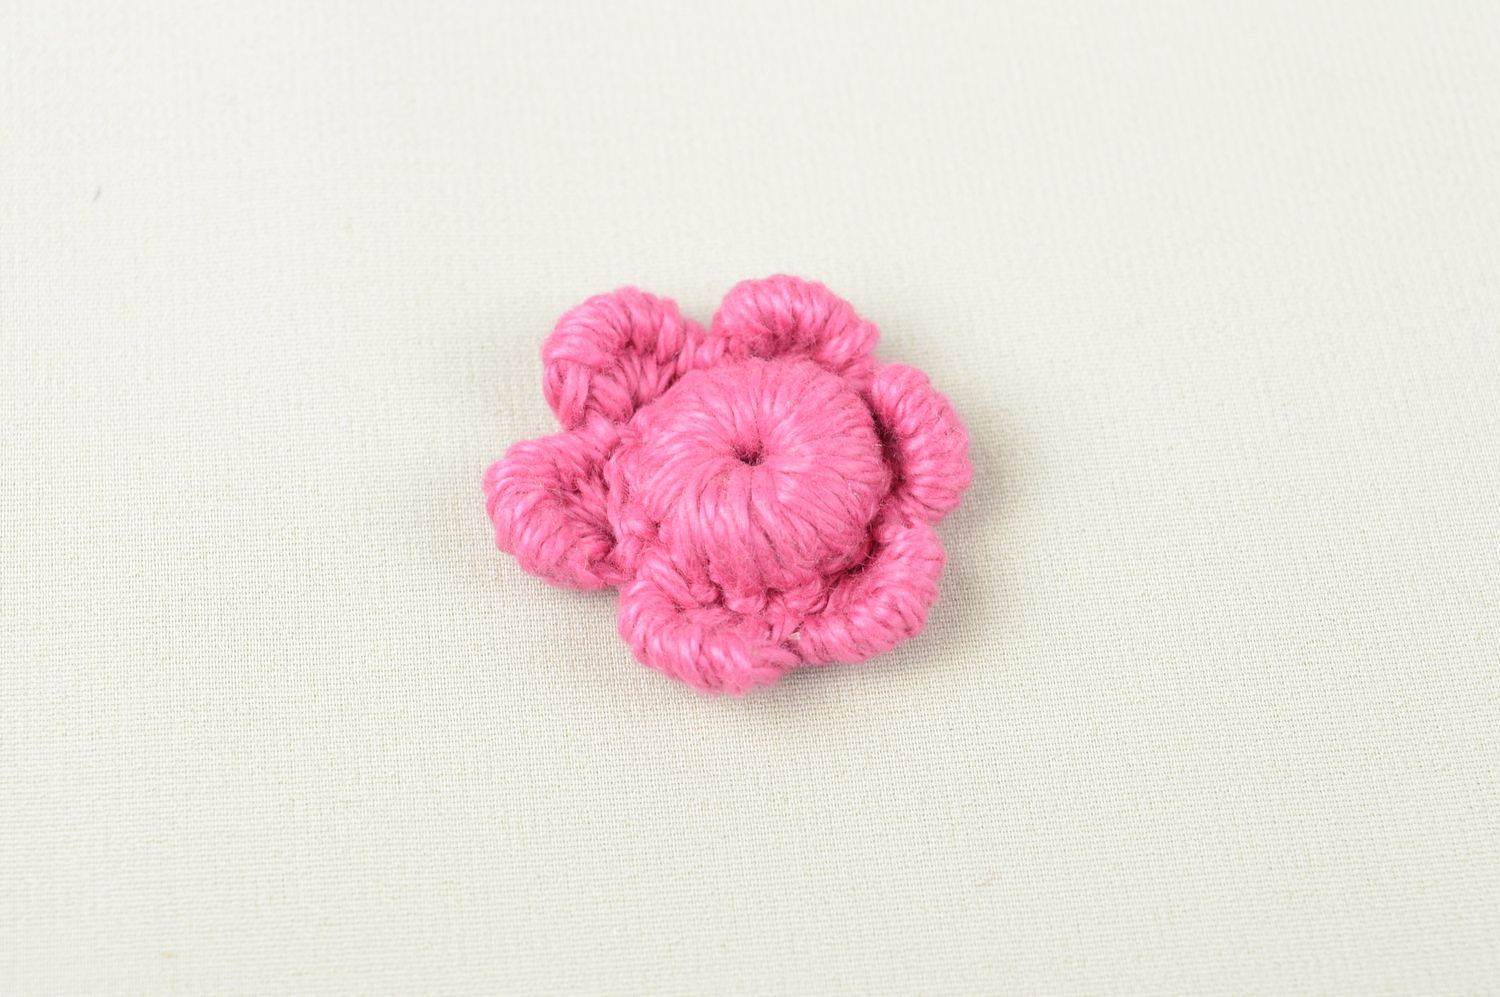 Фурнитура для бижутерии handmade цветок из ниток заготовка для броши на шарф фото 1